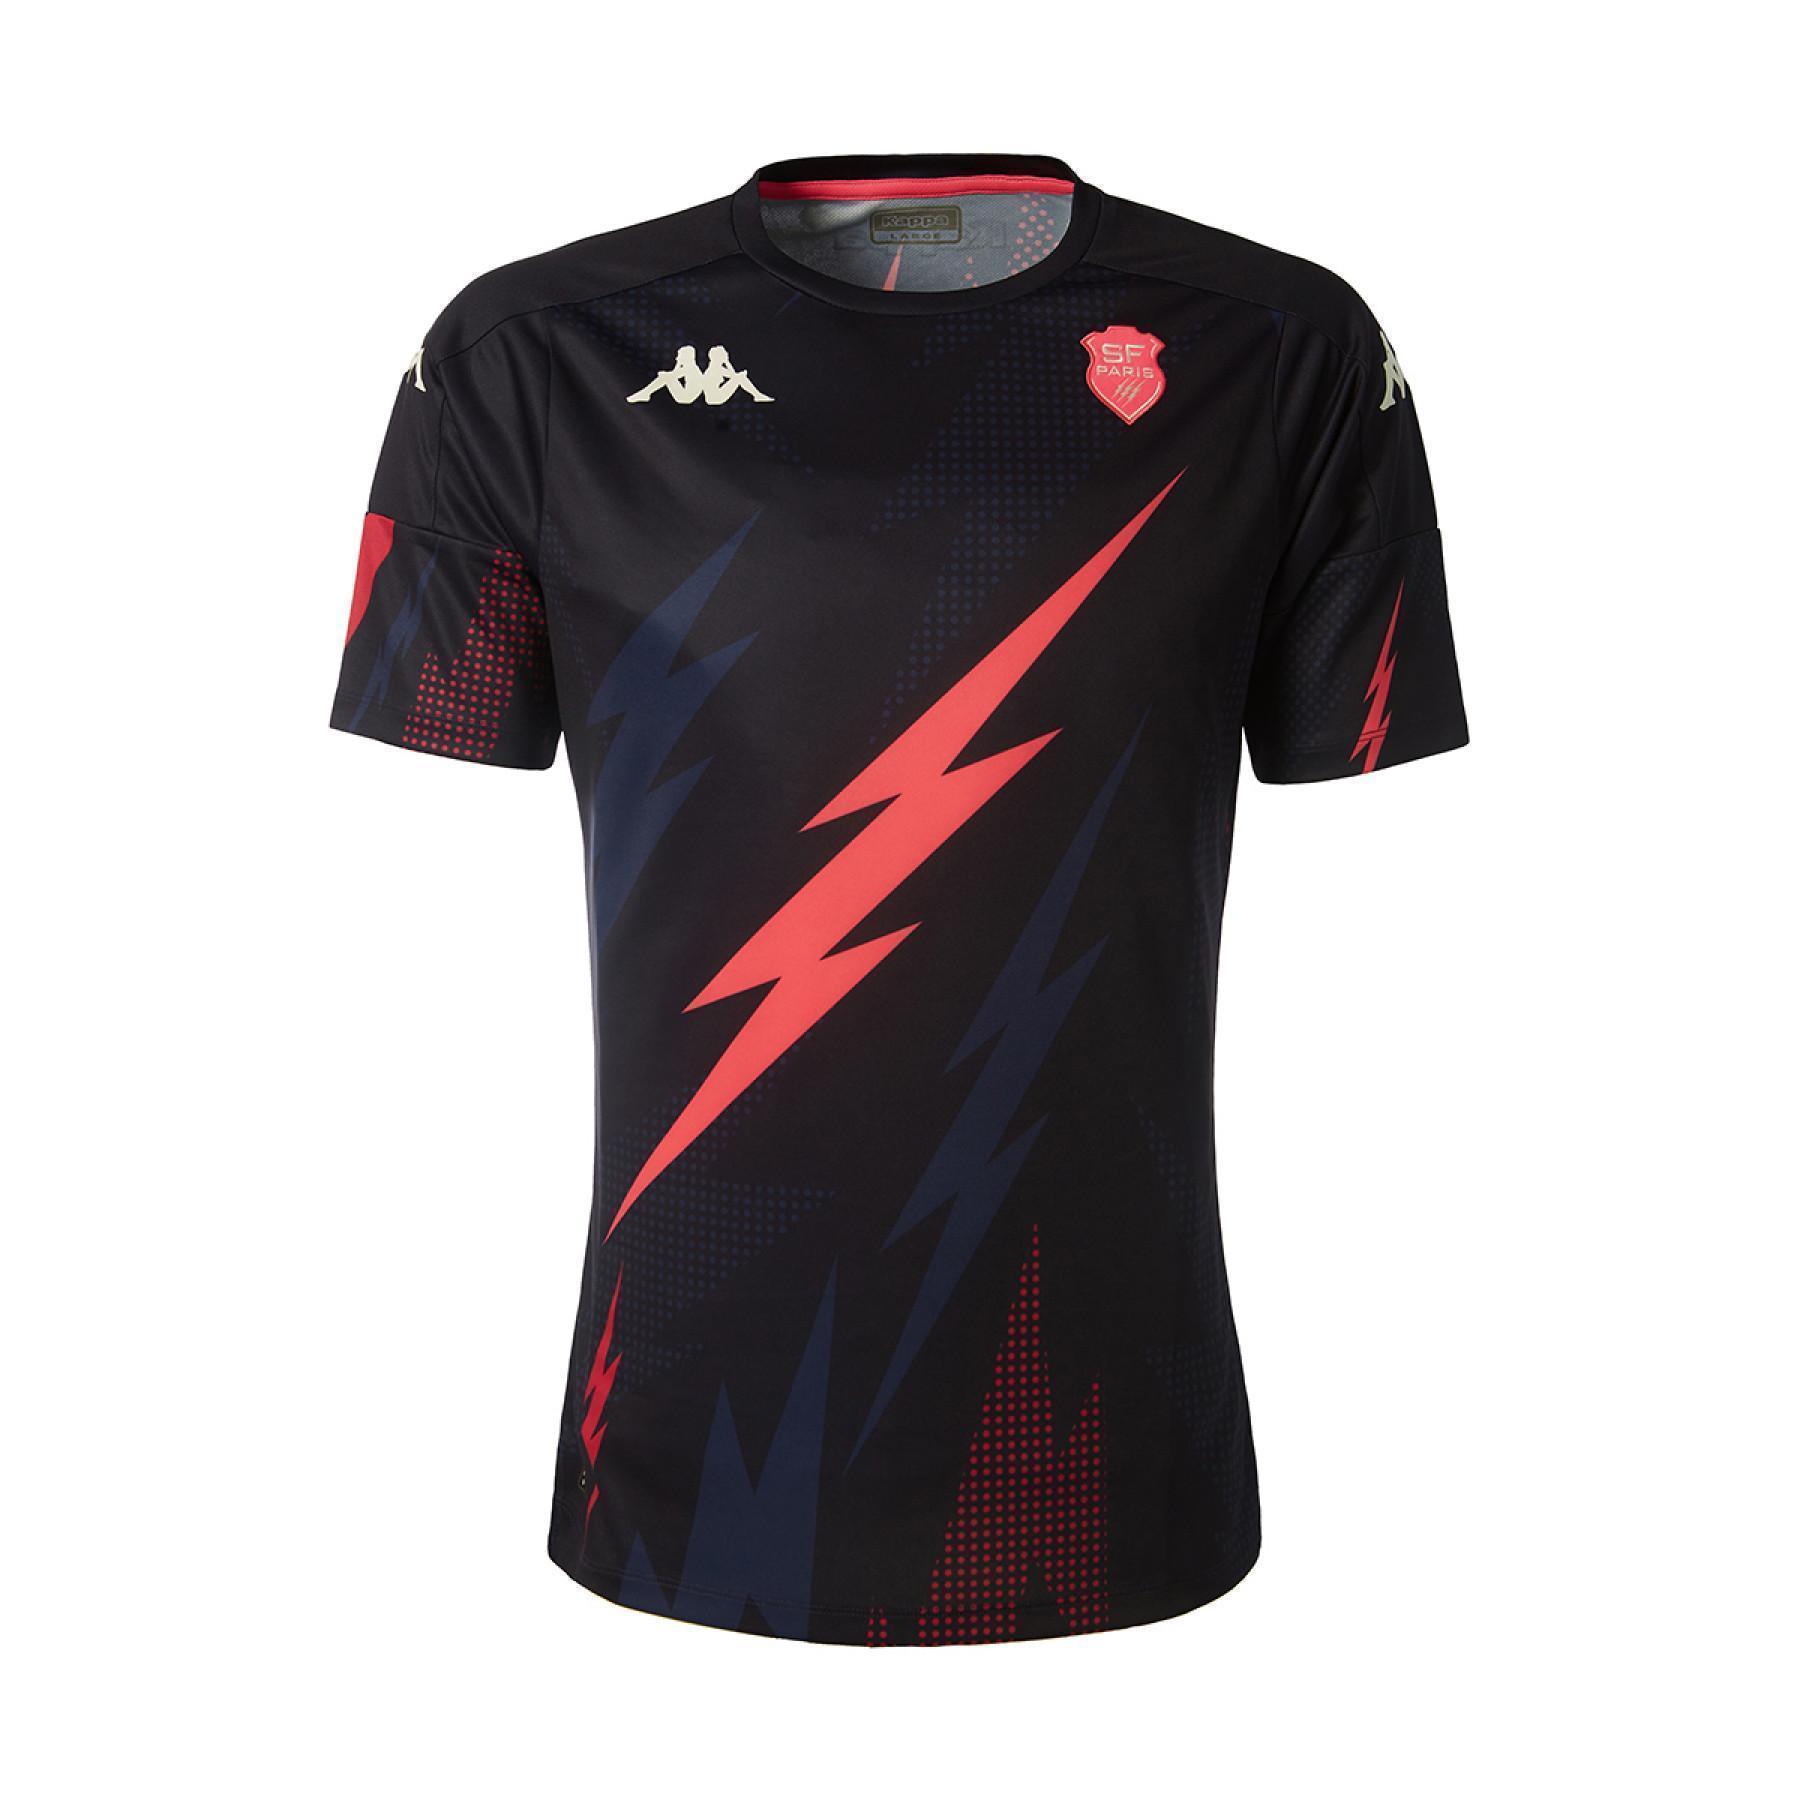 Warm-up T-shirt for children Stade Français 2020/21 aboupre pro 4